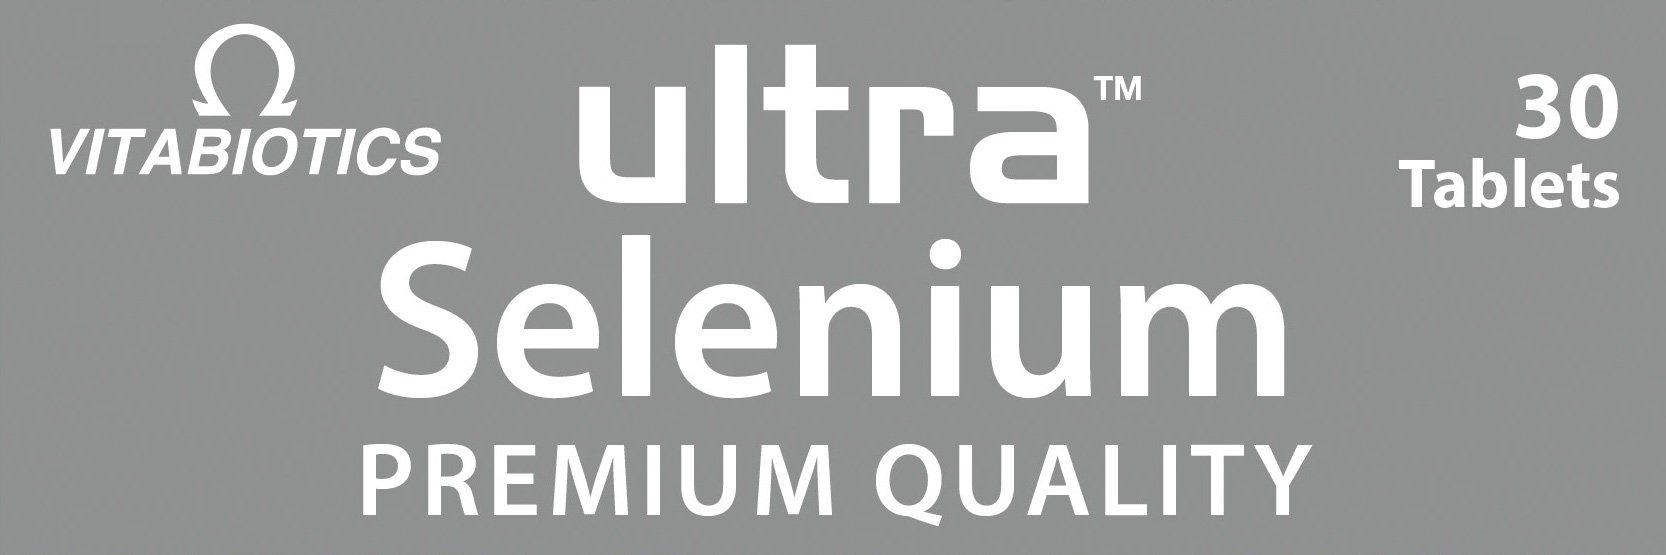 Ultra Selenium Tablets - Pack of 30